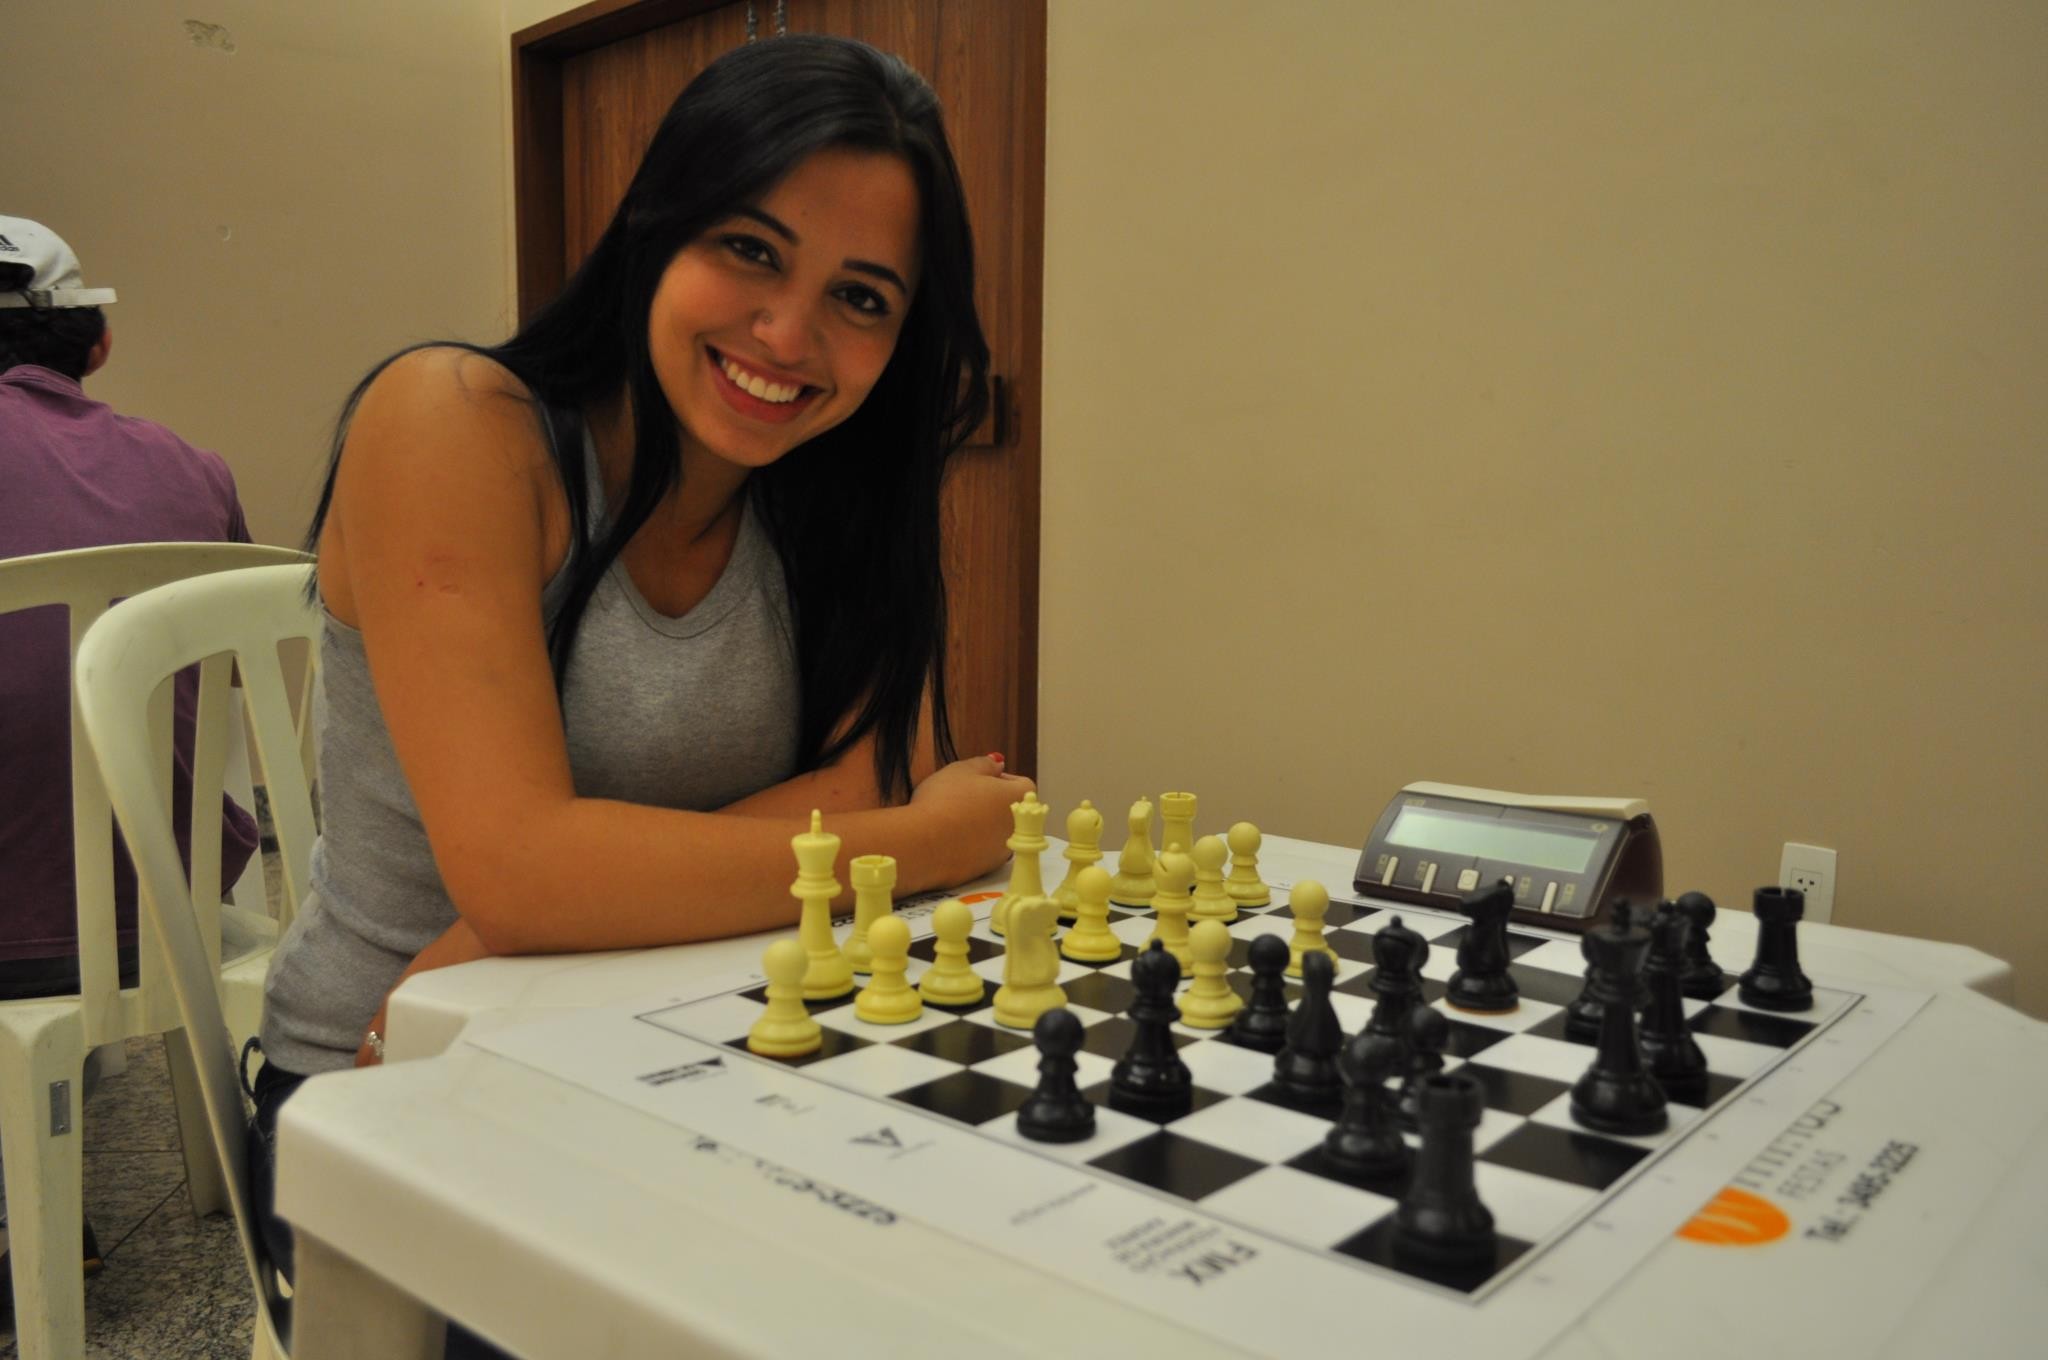 Brazilian chess players for bk.